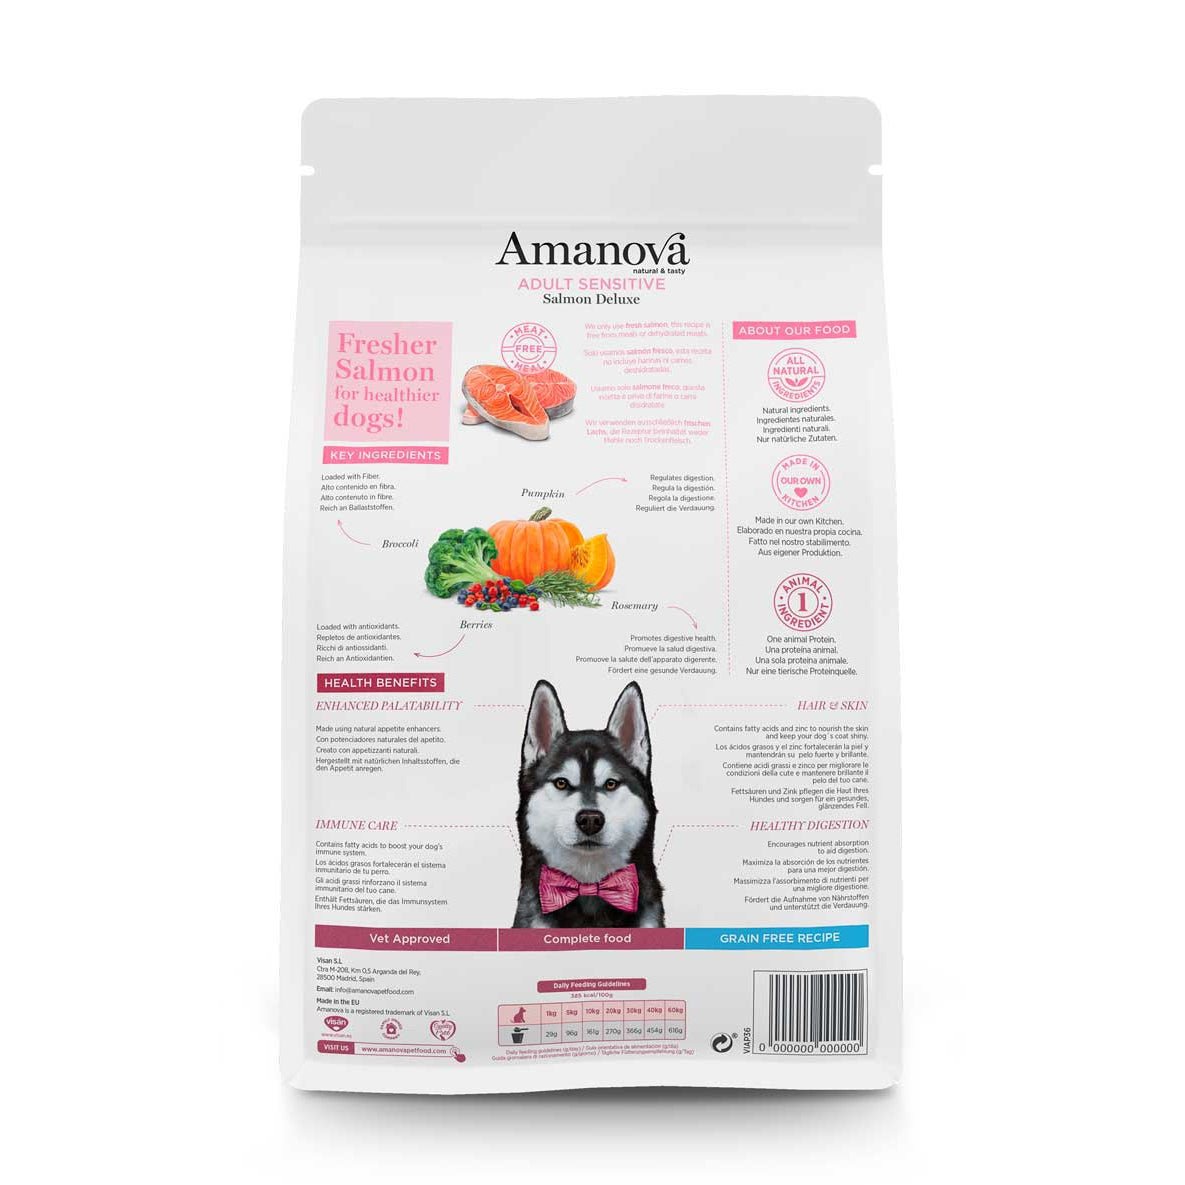 Amanova Adult Sensitive, Salmon Deluxe, Grainfree - Okidogi.store